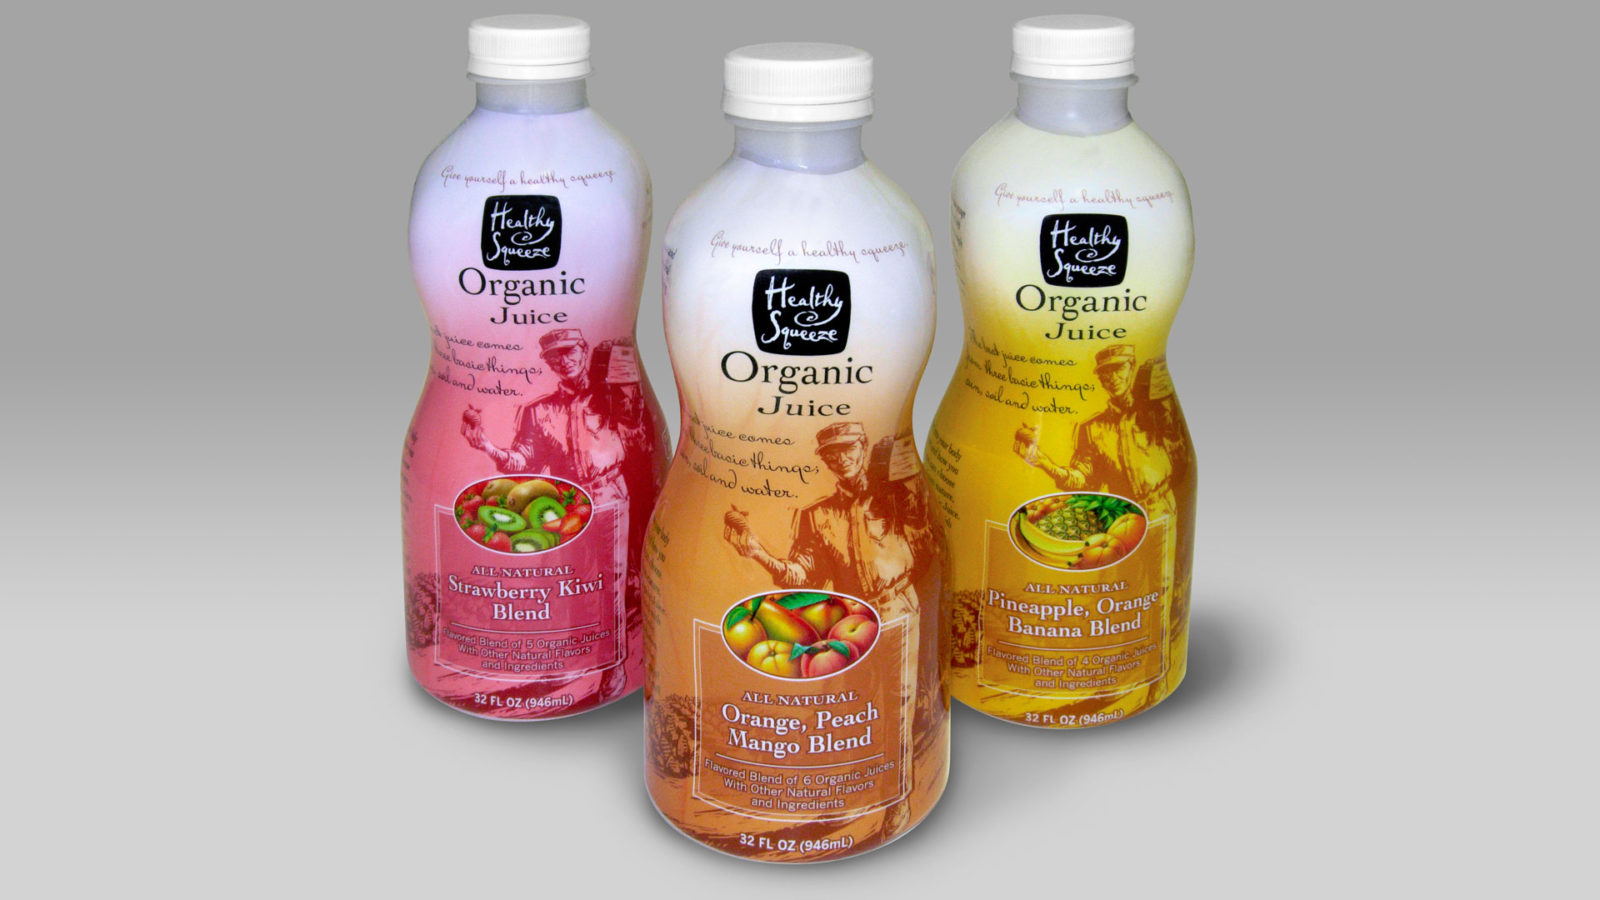 Healthy Squeeze Organic Juice packaging